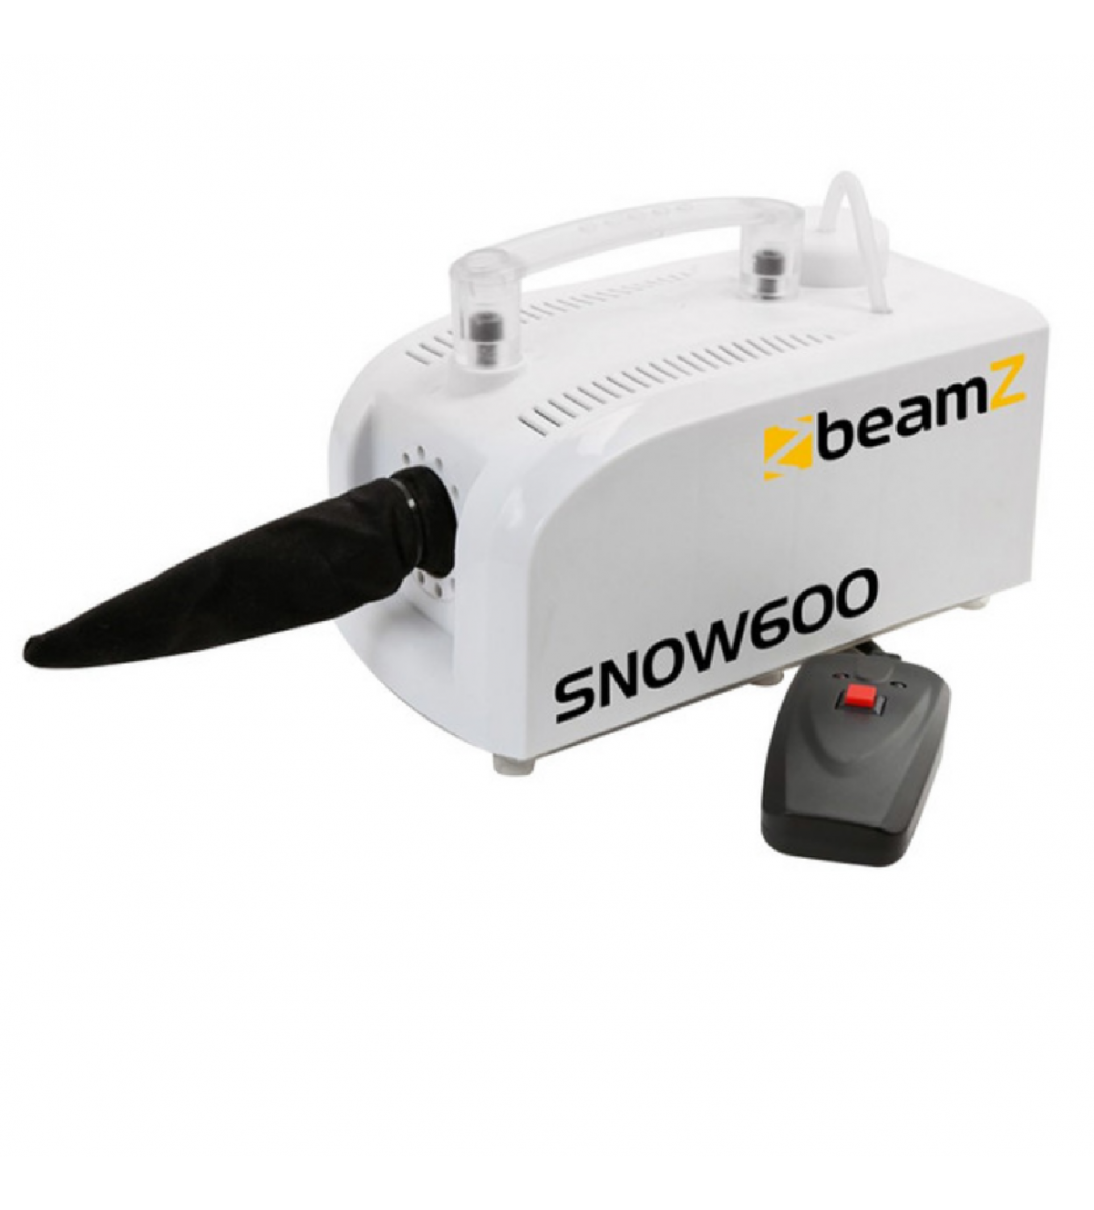 SNOW600 SnowMachine